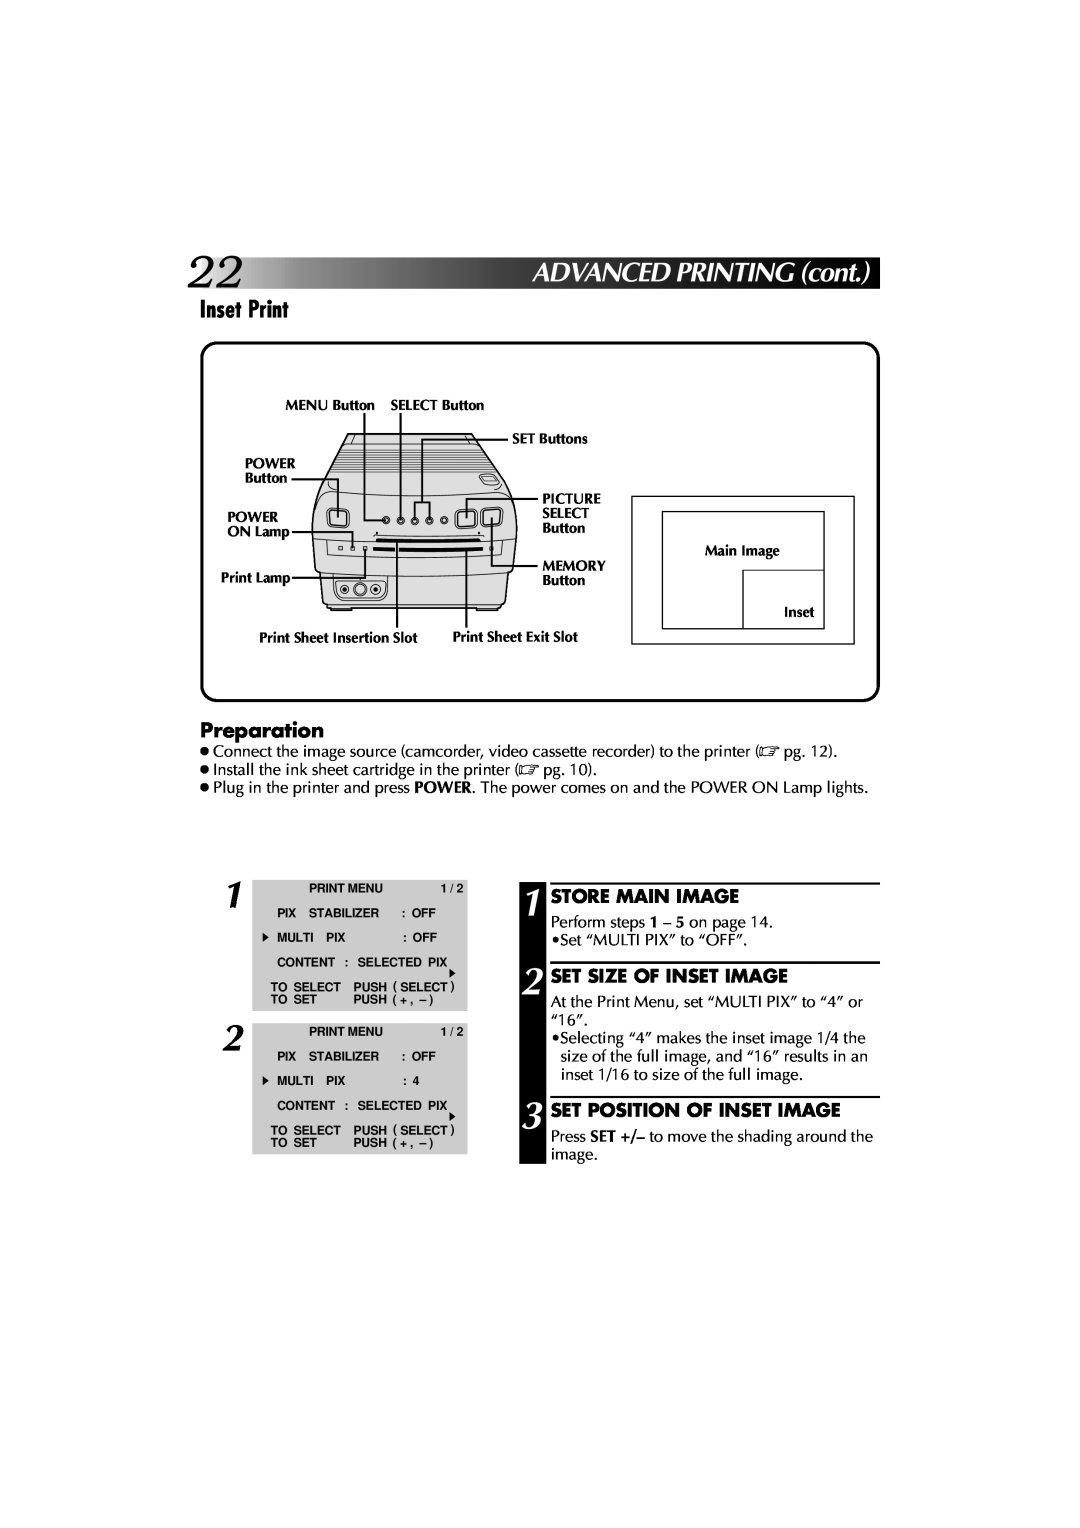 JVC GV-PT1 manual Inset Print, Set Size Of Inset Image, Set Position Of Inset Image, ADVANCEDPRINTINGcont, Preparation 